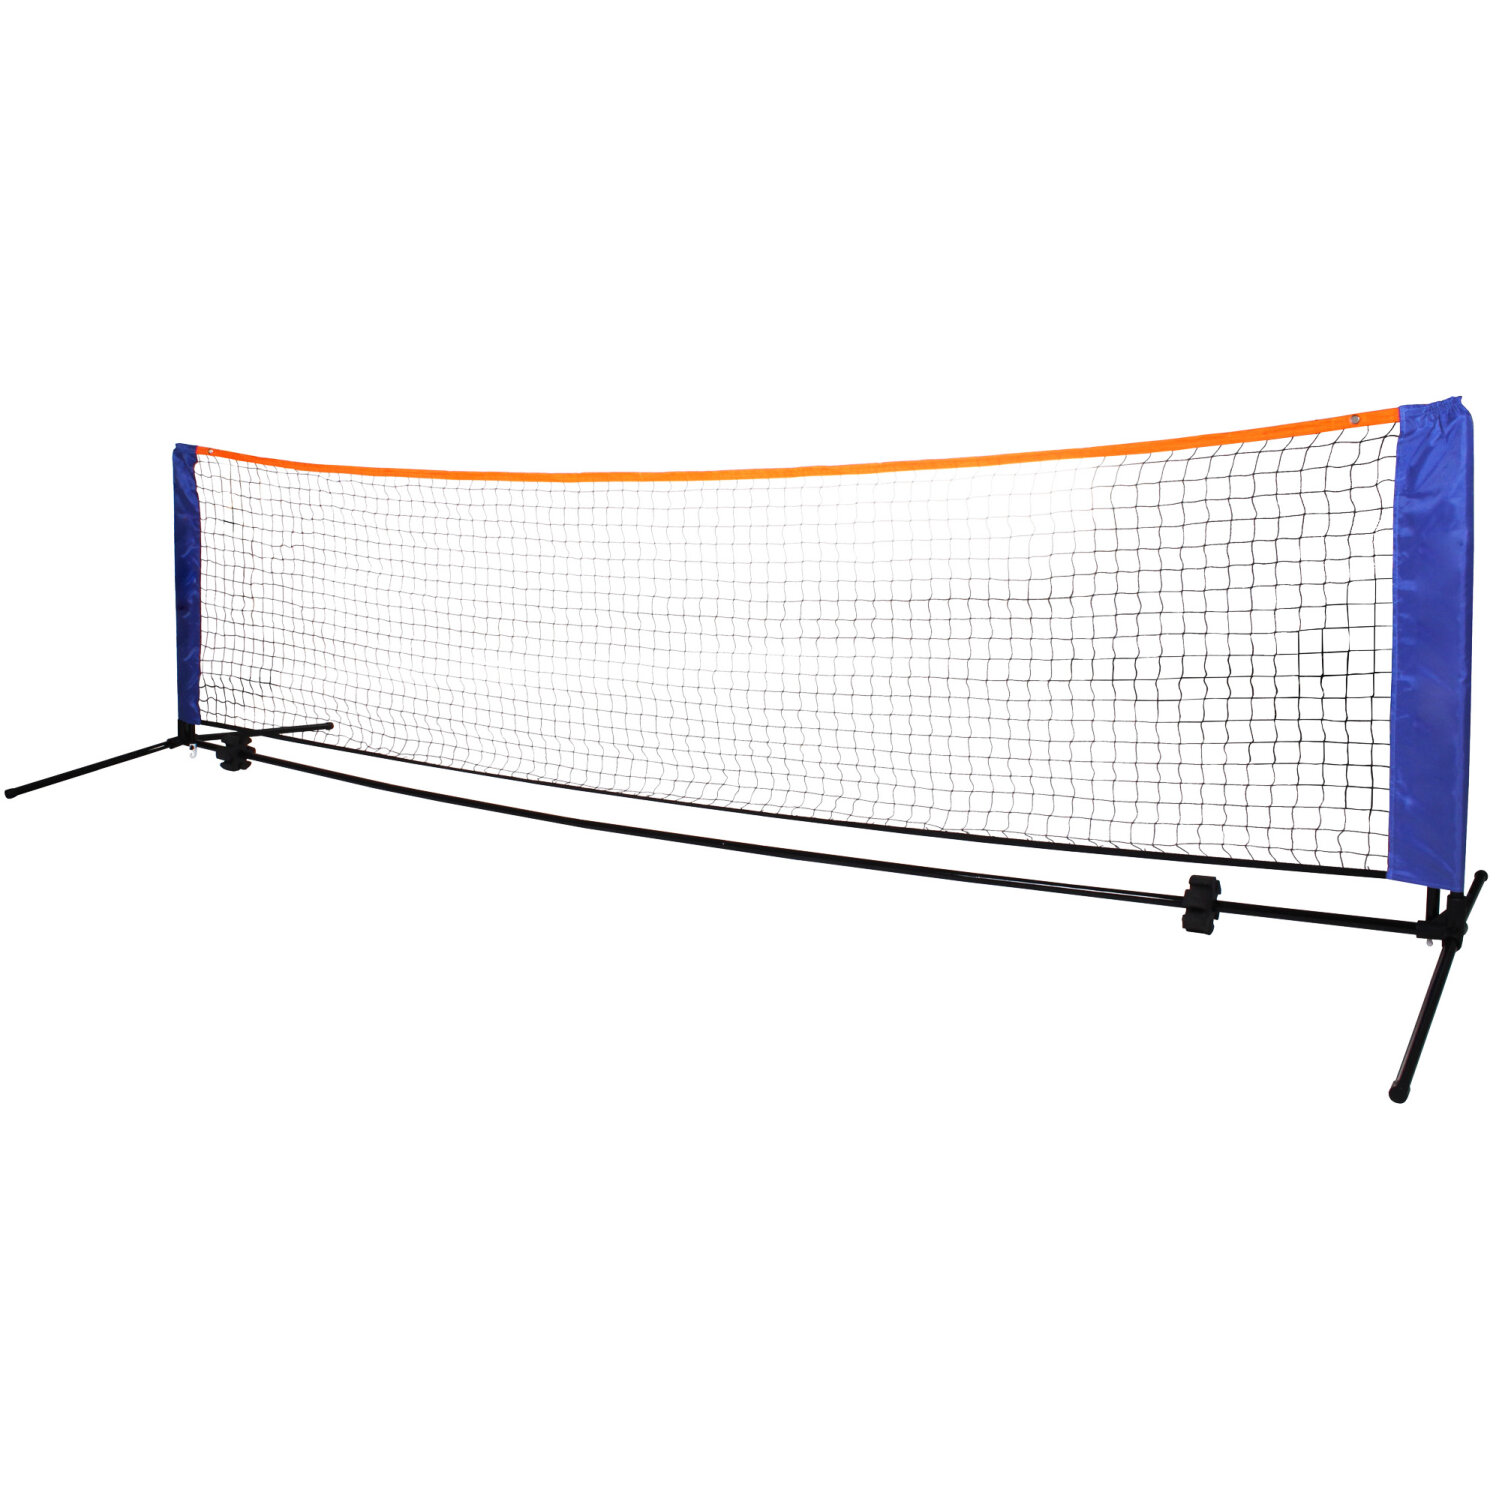 4m Portable Height Adjustable Outdoor Garden Badminton Tennis Volleyball Net Set 